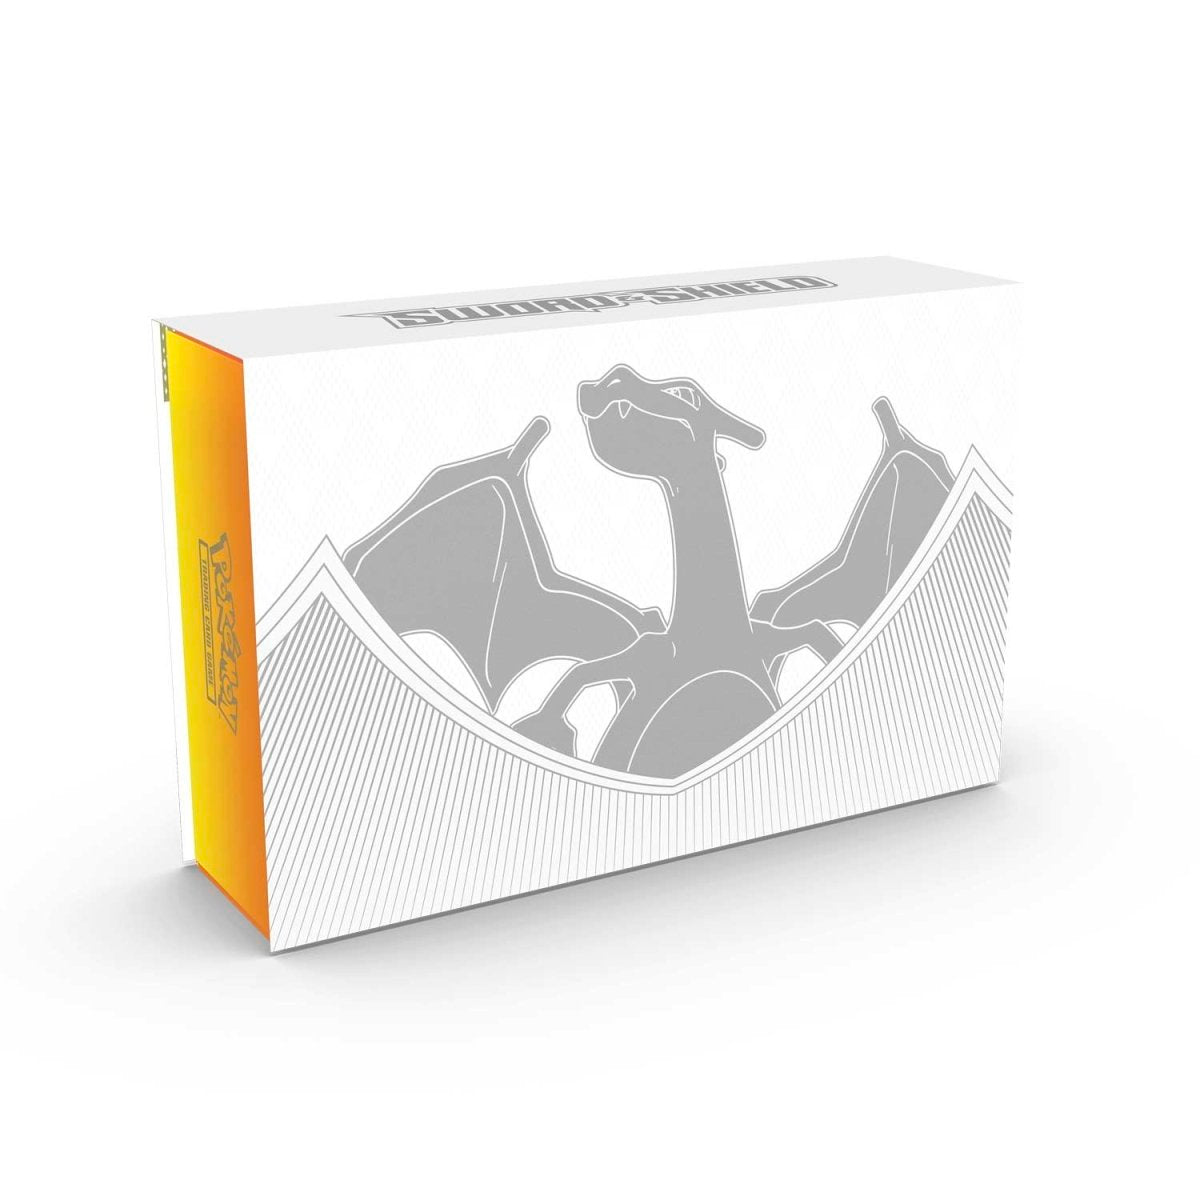 Pokemon Charizard UPC Ultra Premium Collection - OPEN BOX & Set Book (No Contents)